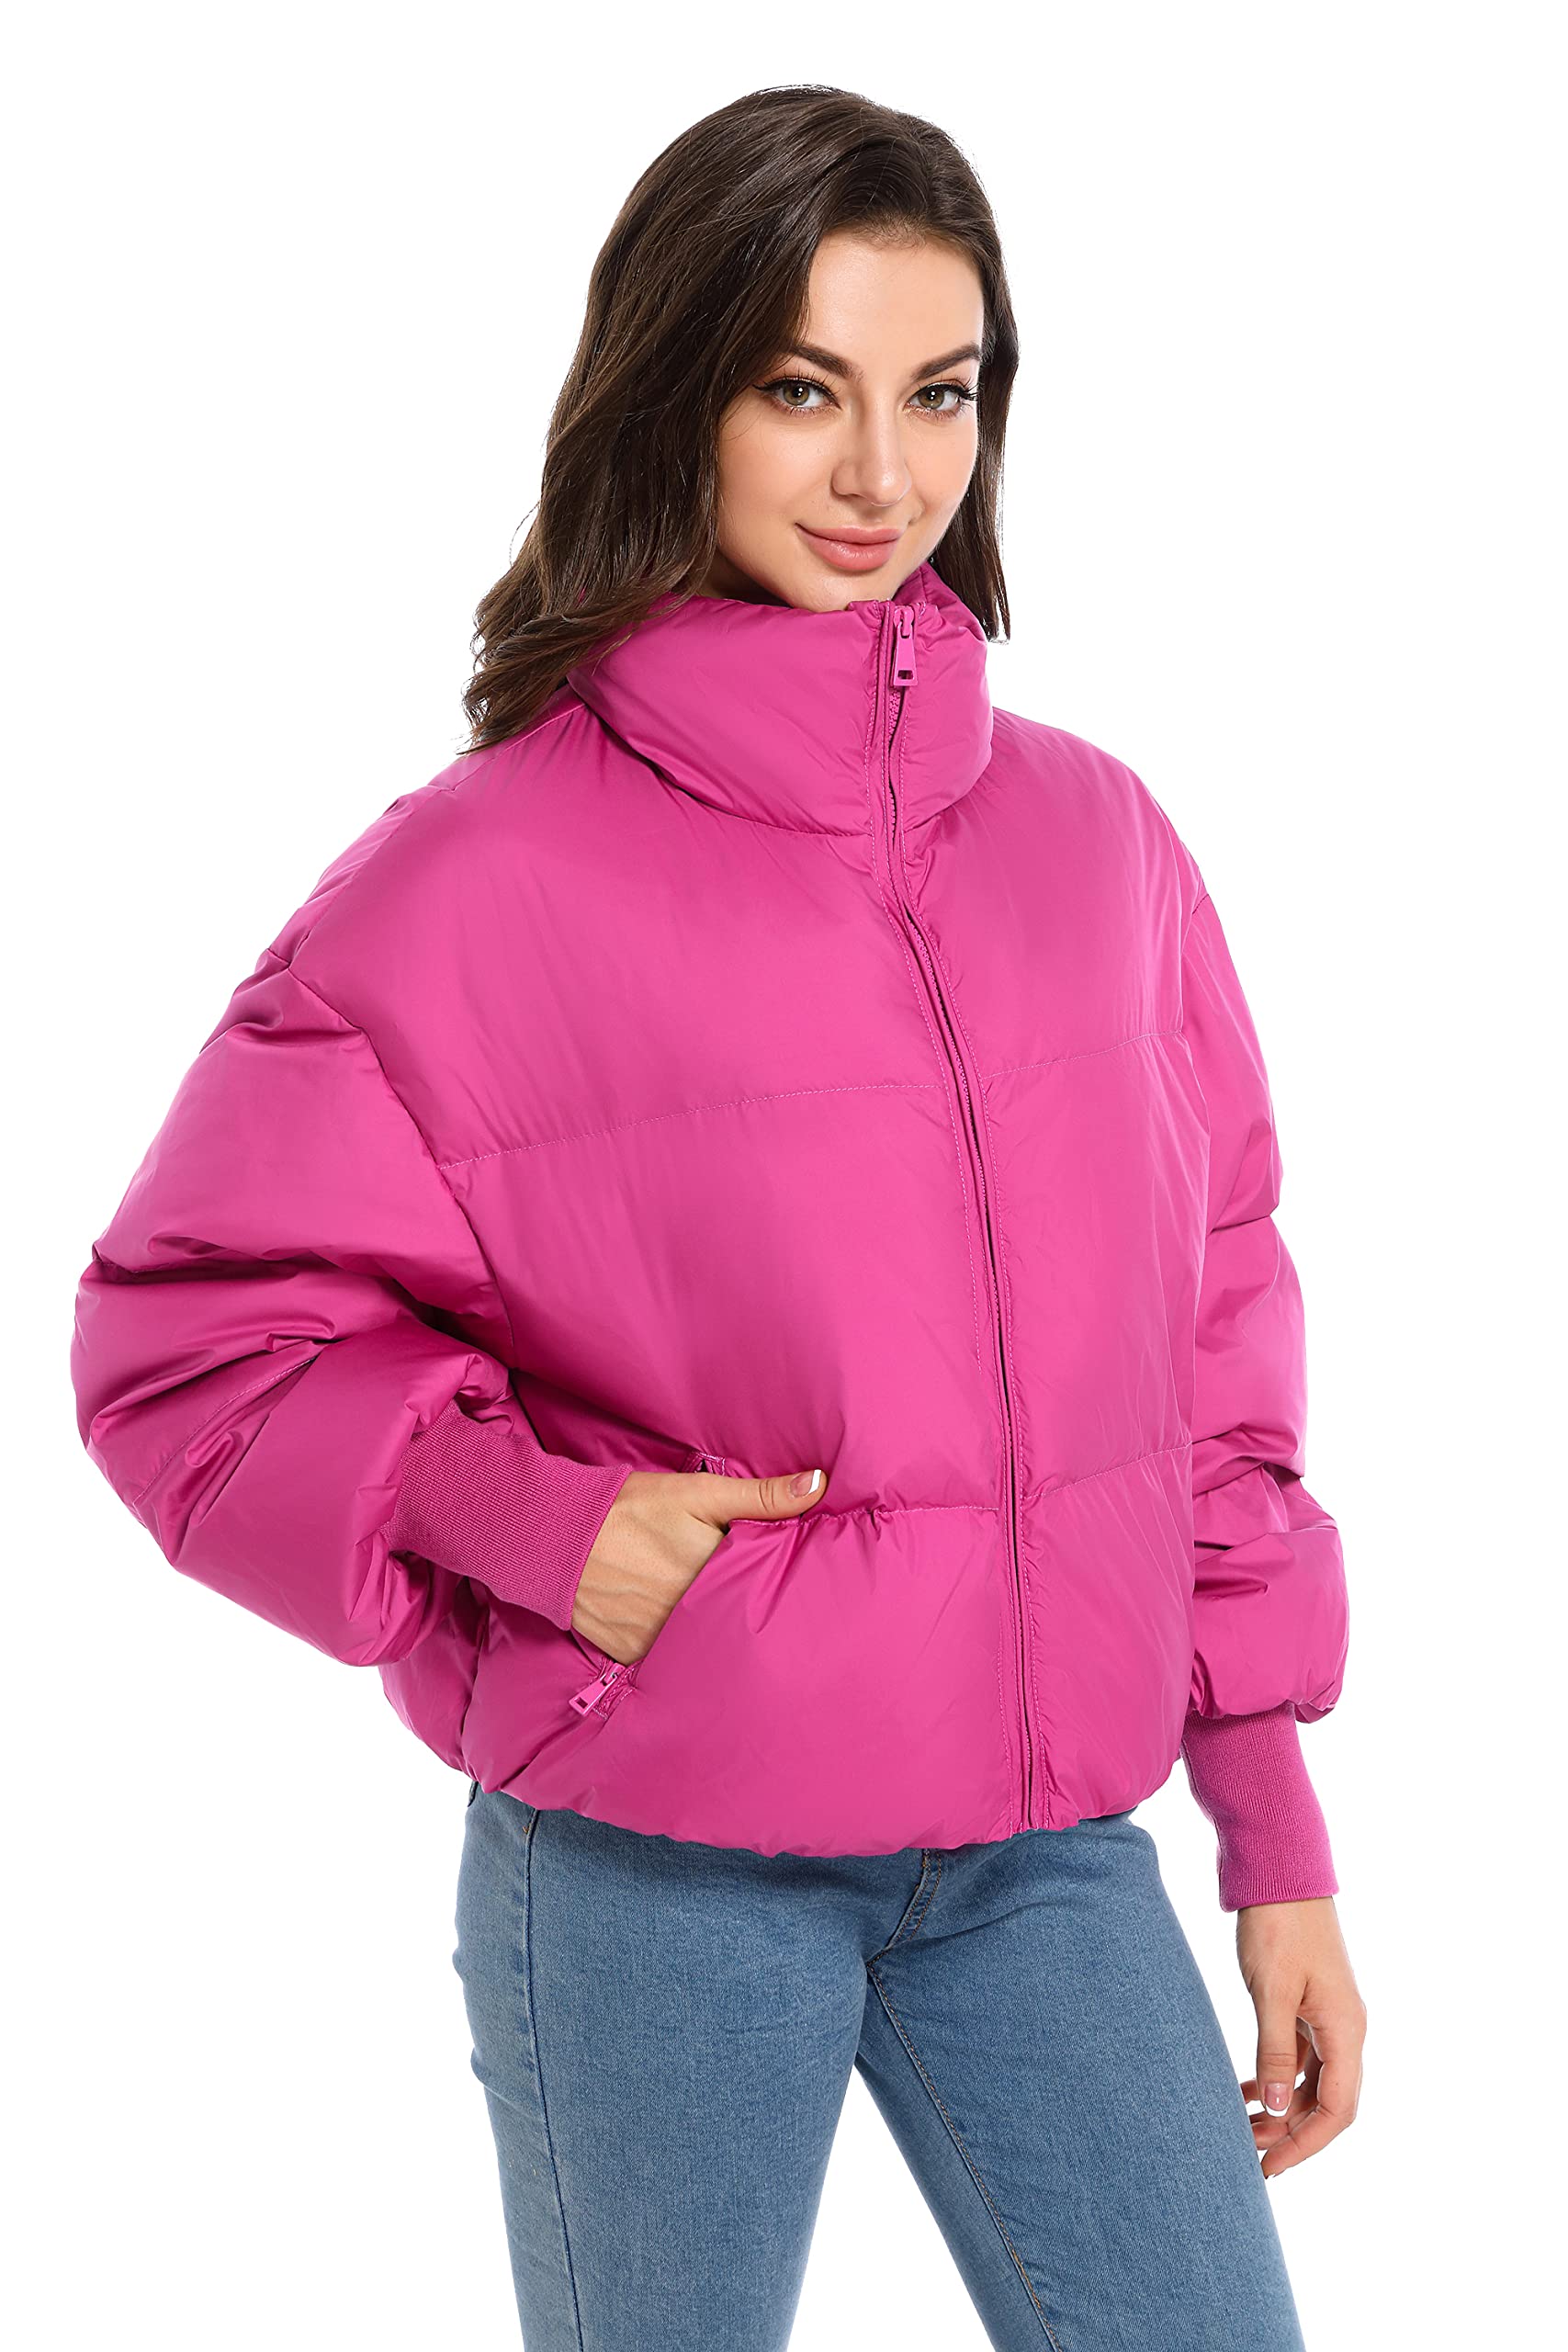 Orolay Womens Winter Oversized Short Down Jacket Crop Zip Puffer Coat